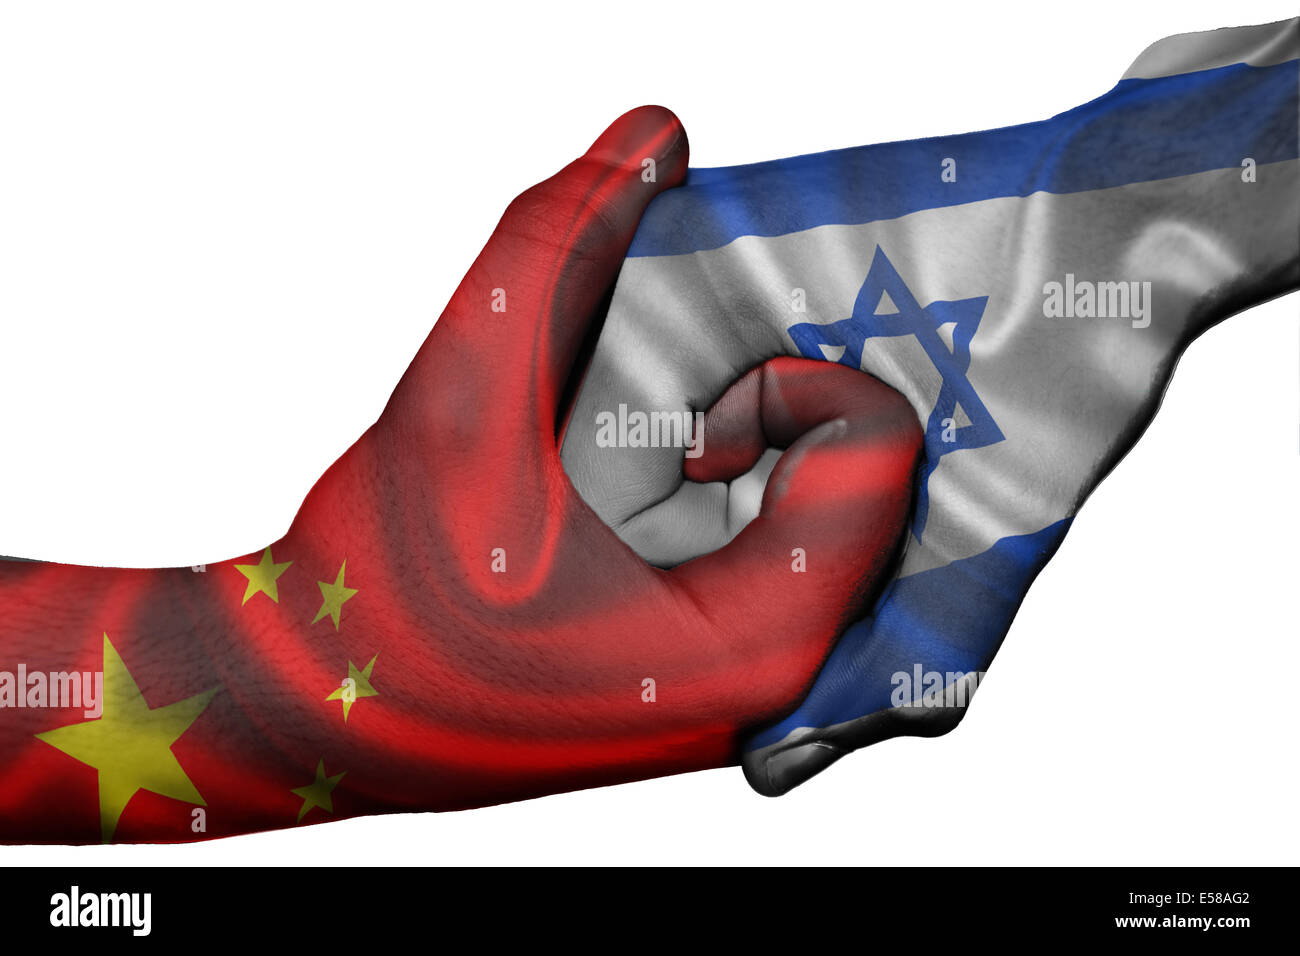 Handshake diplomatiche tra paesi: bandiere di Cina e Israele sovradipinta le due mani Foto Stock